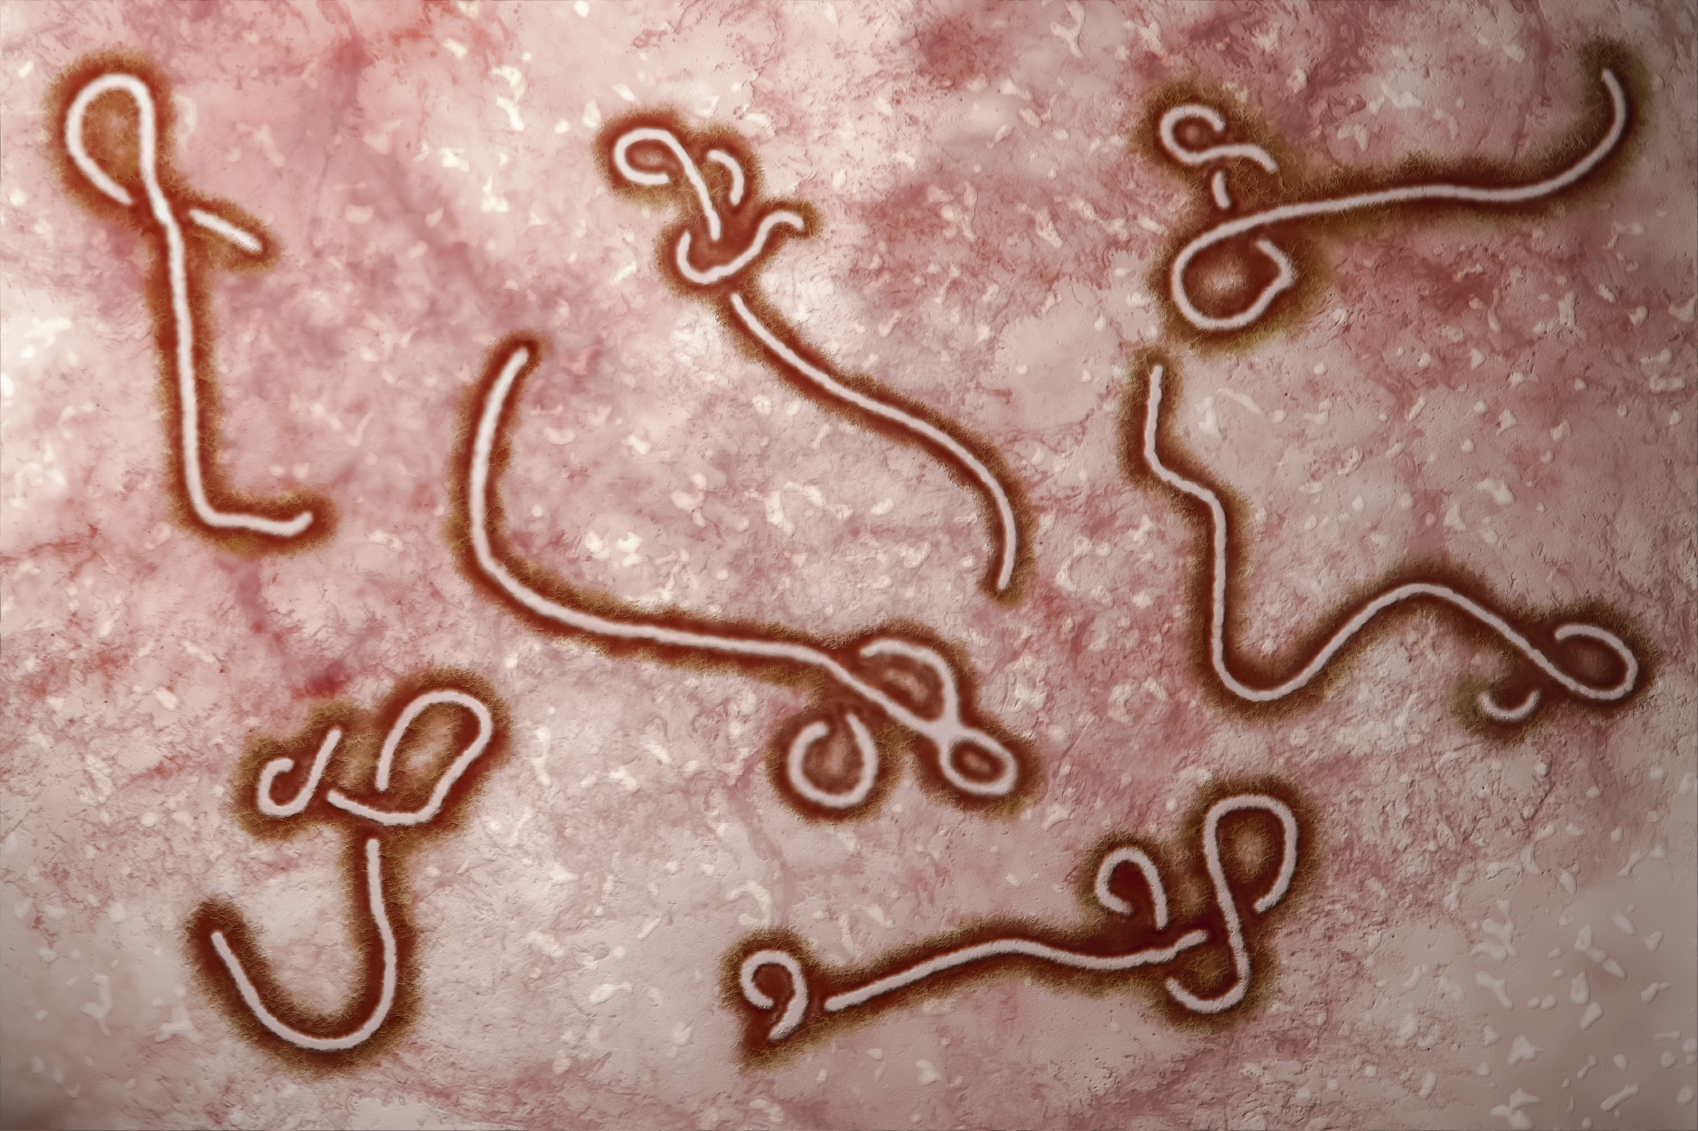 Microscopic view of Ebola Virus